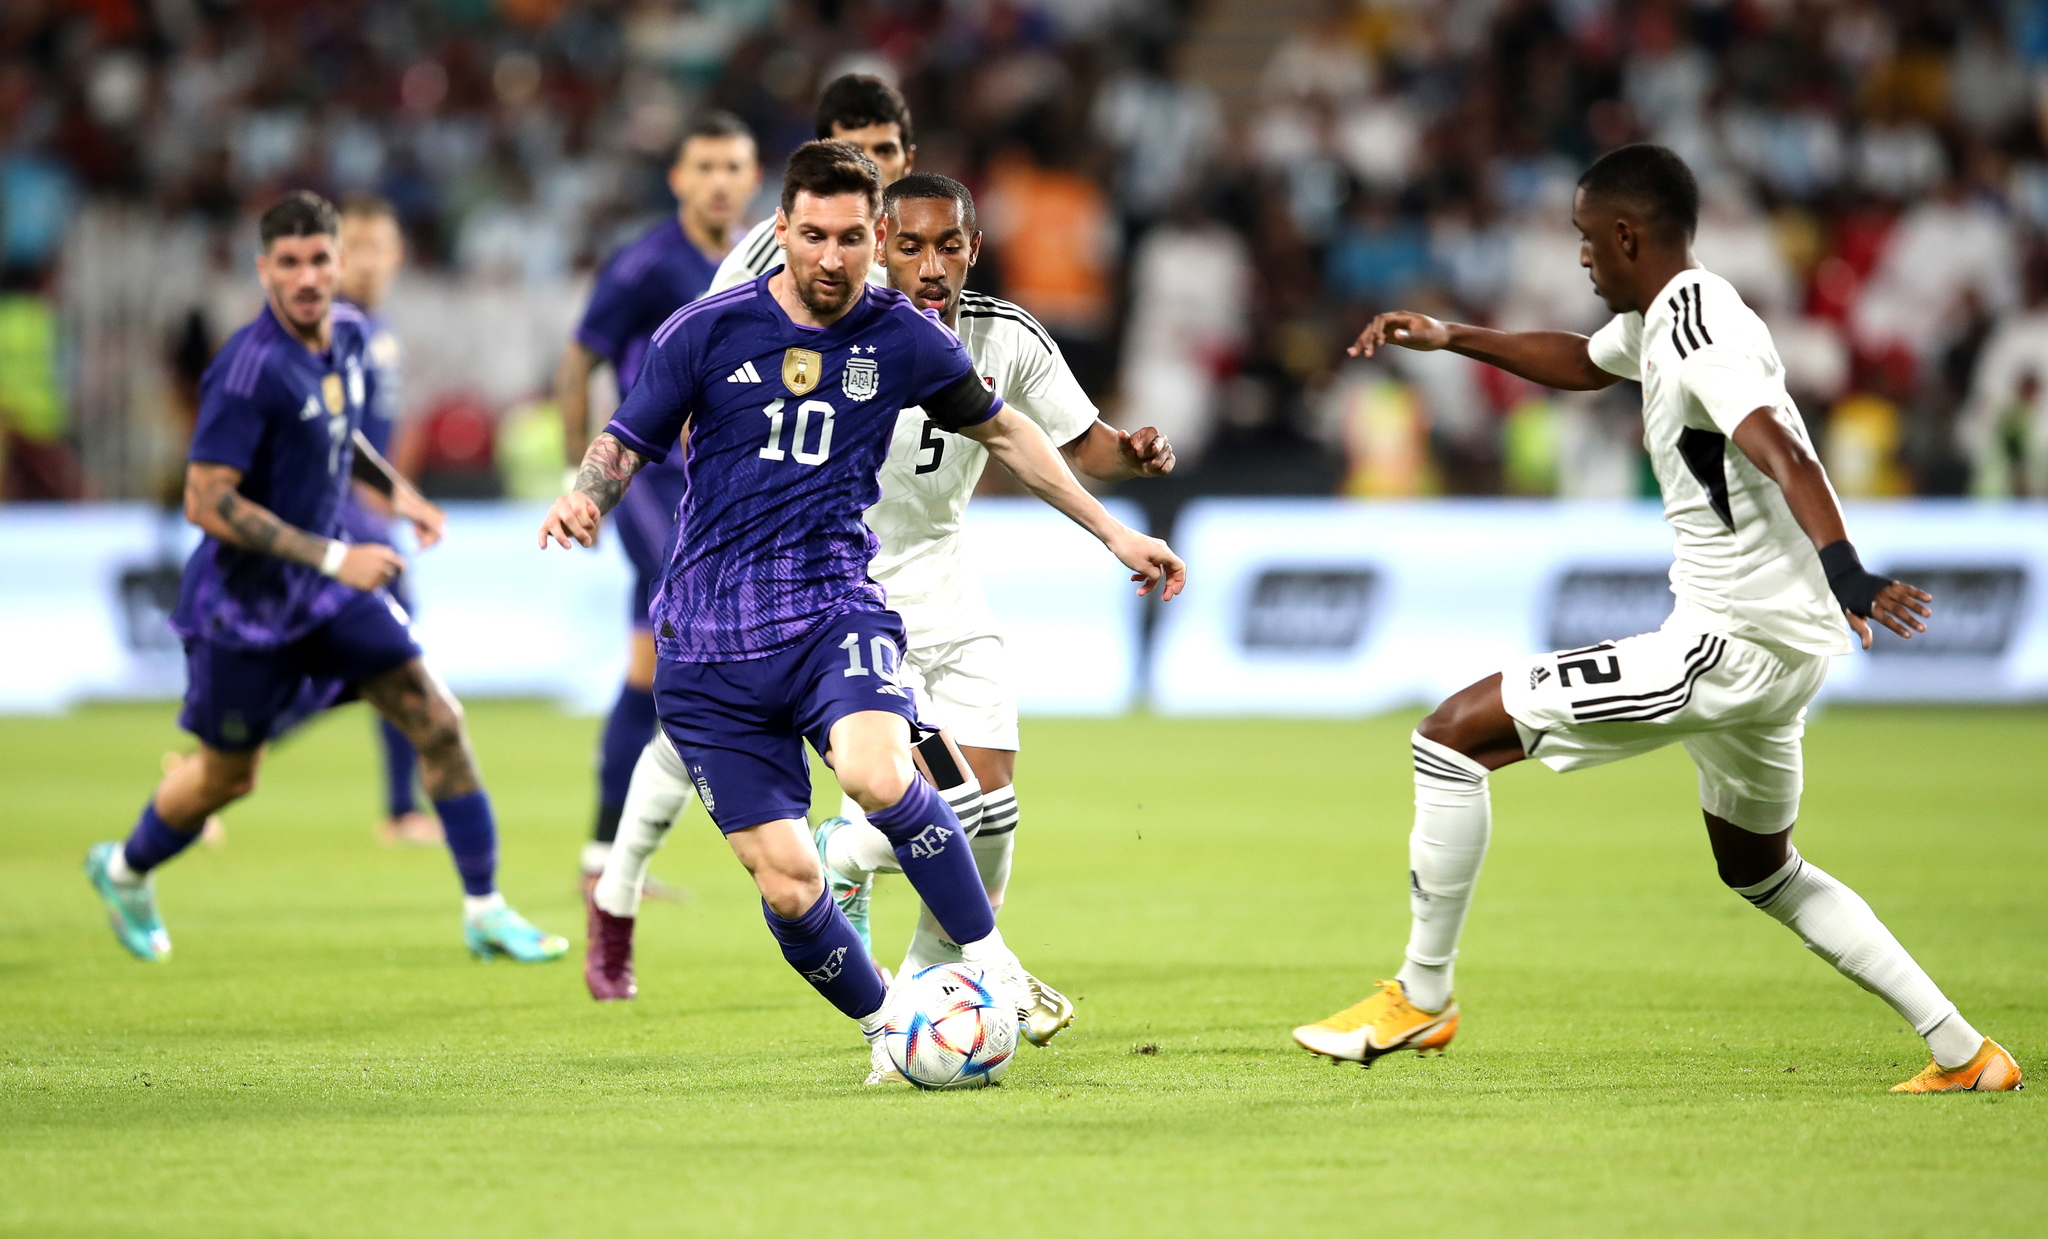 Abu Dhabi (United Arab Emirates), 16/11/2022.- Lionel Messi (L) of  lt;HIT gt;Argentina lt;/HIT gt; in action against Khalifa Al Hammadi (L) and Ali Salmin of UAE during the international friendly soccer match between the United Arab Emirates and  lt;HIT gt;Argentina lt;/HIT gt; in Abu Dhabi, UAE, 16 November 2022.  lt;HIT gt;Argentina lt;/HIT gt; is preparing for the FIFA World Cup 2022 in Qatar with their first match against Saudi Arabia on 22 November. (Futbol, Amistoso, Mundial de Fútbol, Arabia Saudita, Emiratos Árabes Unidos, Catar) EFE/EPA/ALI HAIDER